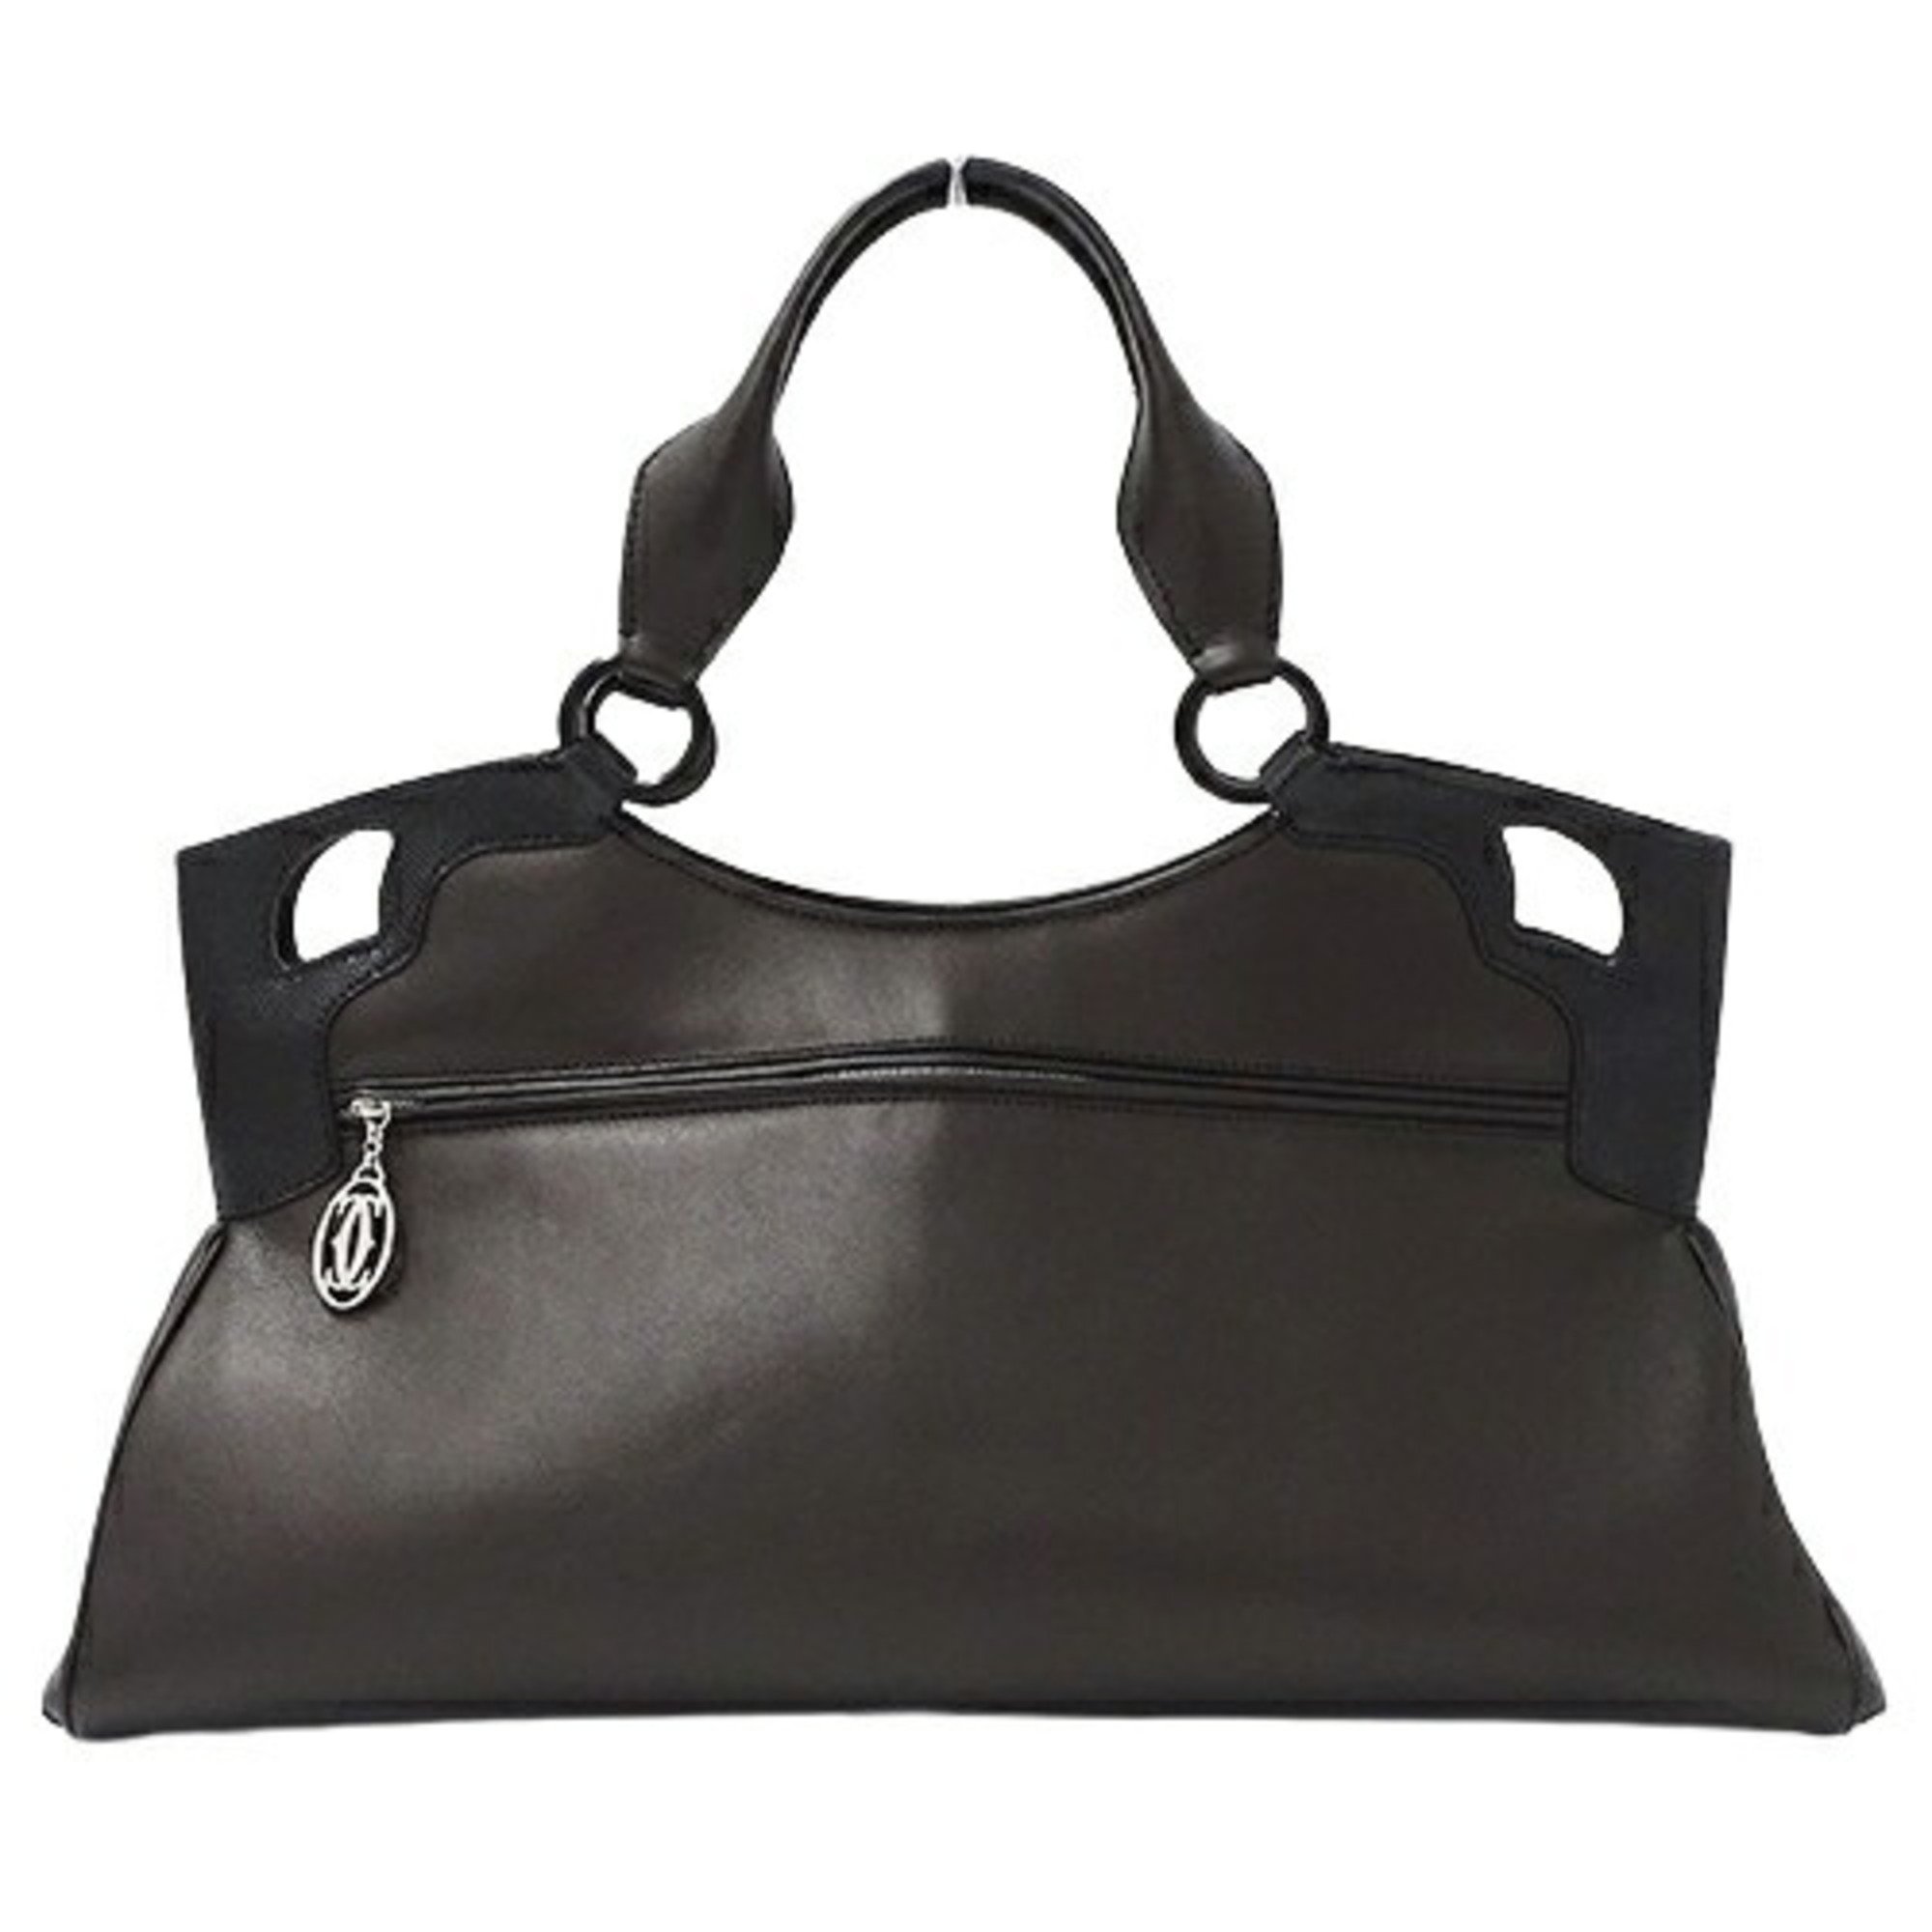 Cartier Women's Handbag Tote Bag Marcello Leather Dark Brown